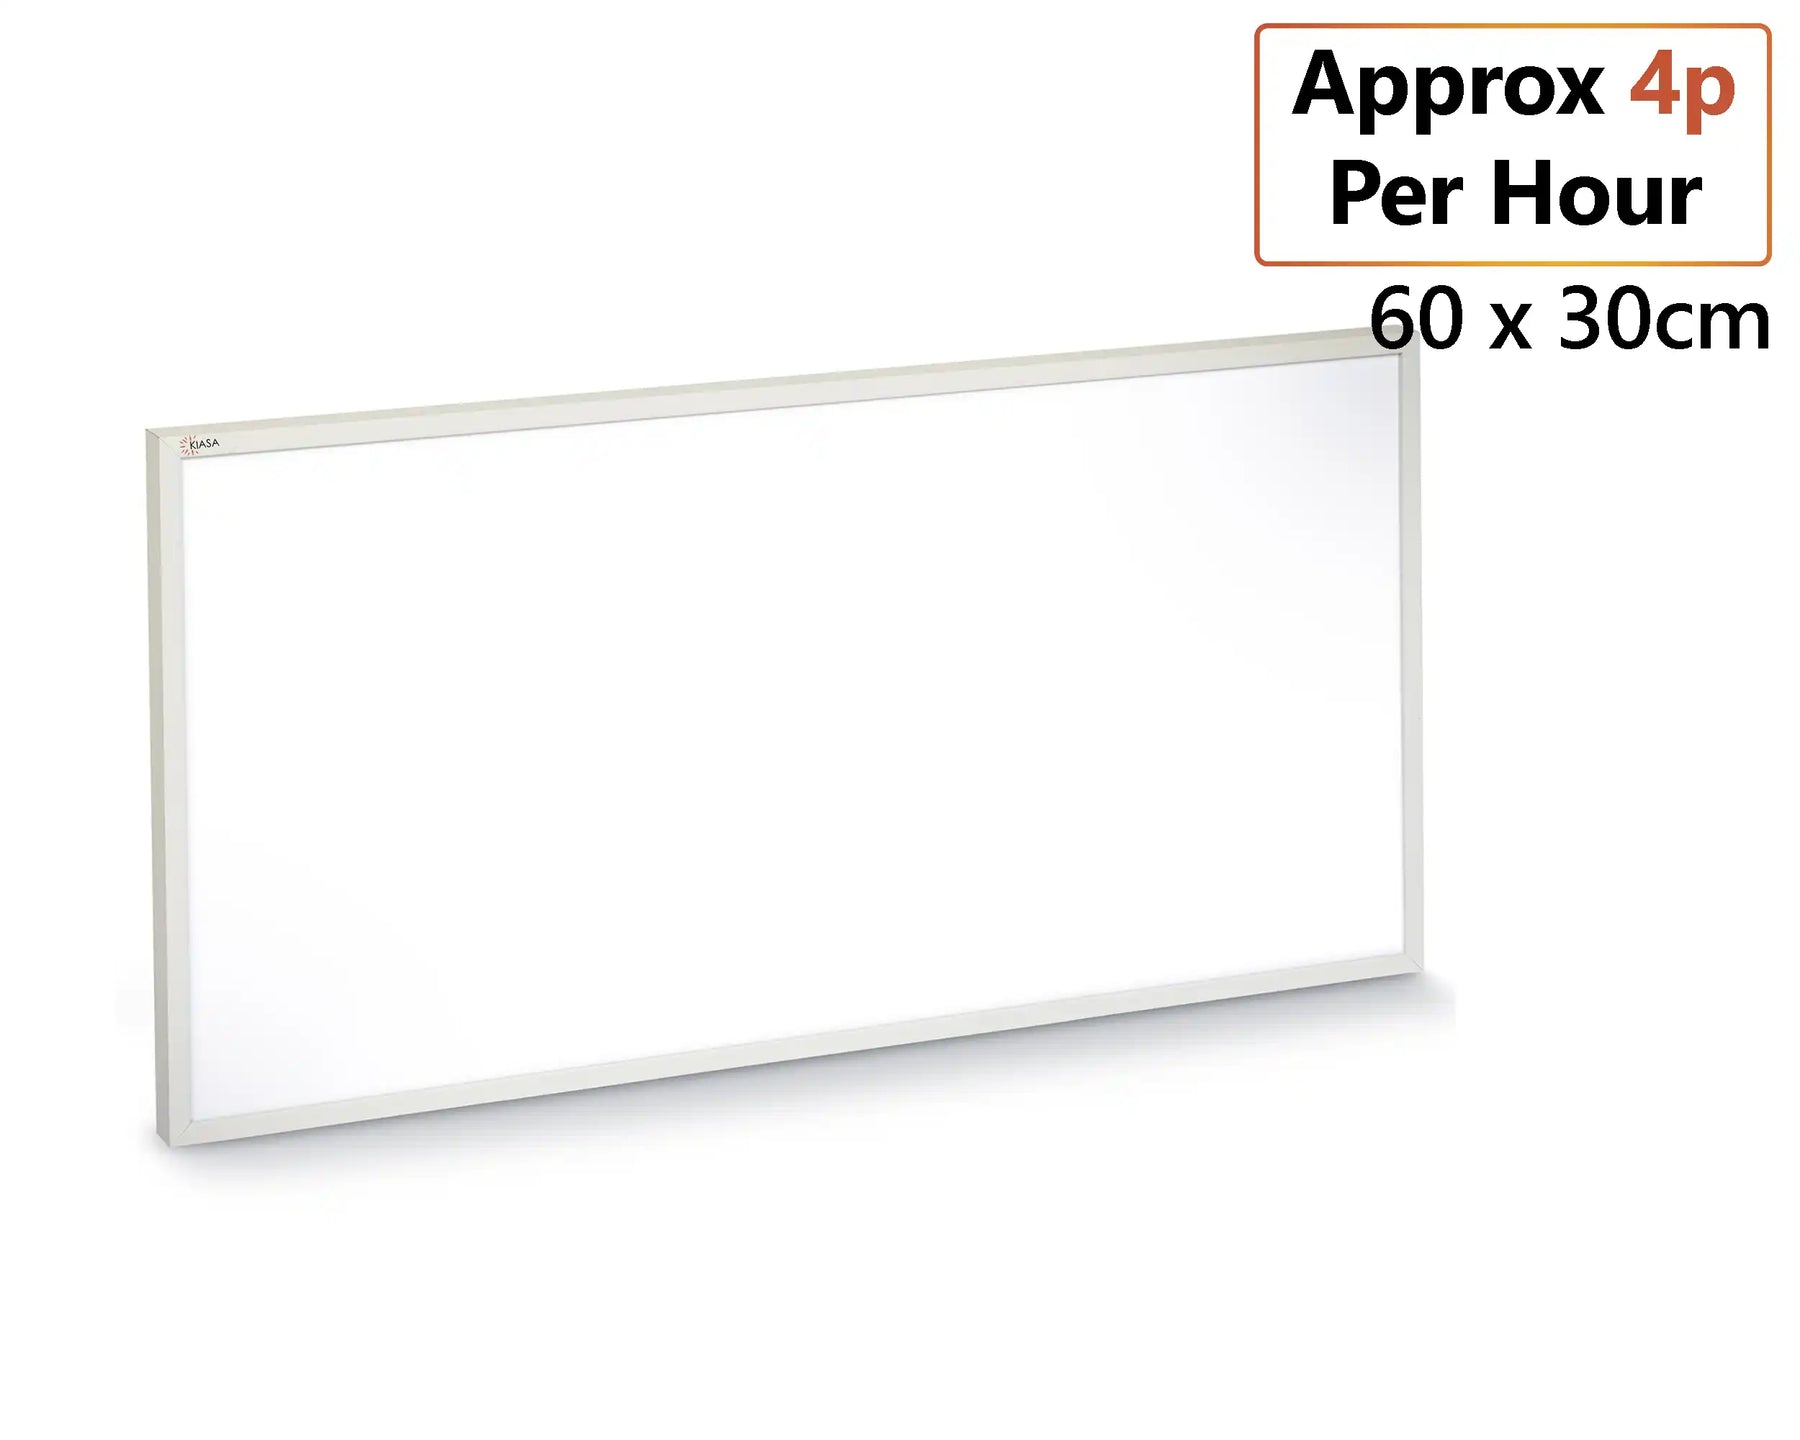 Kiasa Infrared Panel 180w - White Classic 60cm x 30cm Running cost 4p per hour